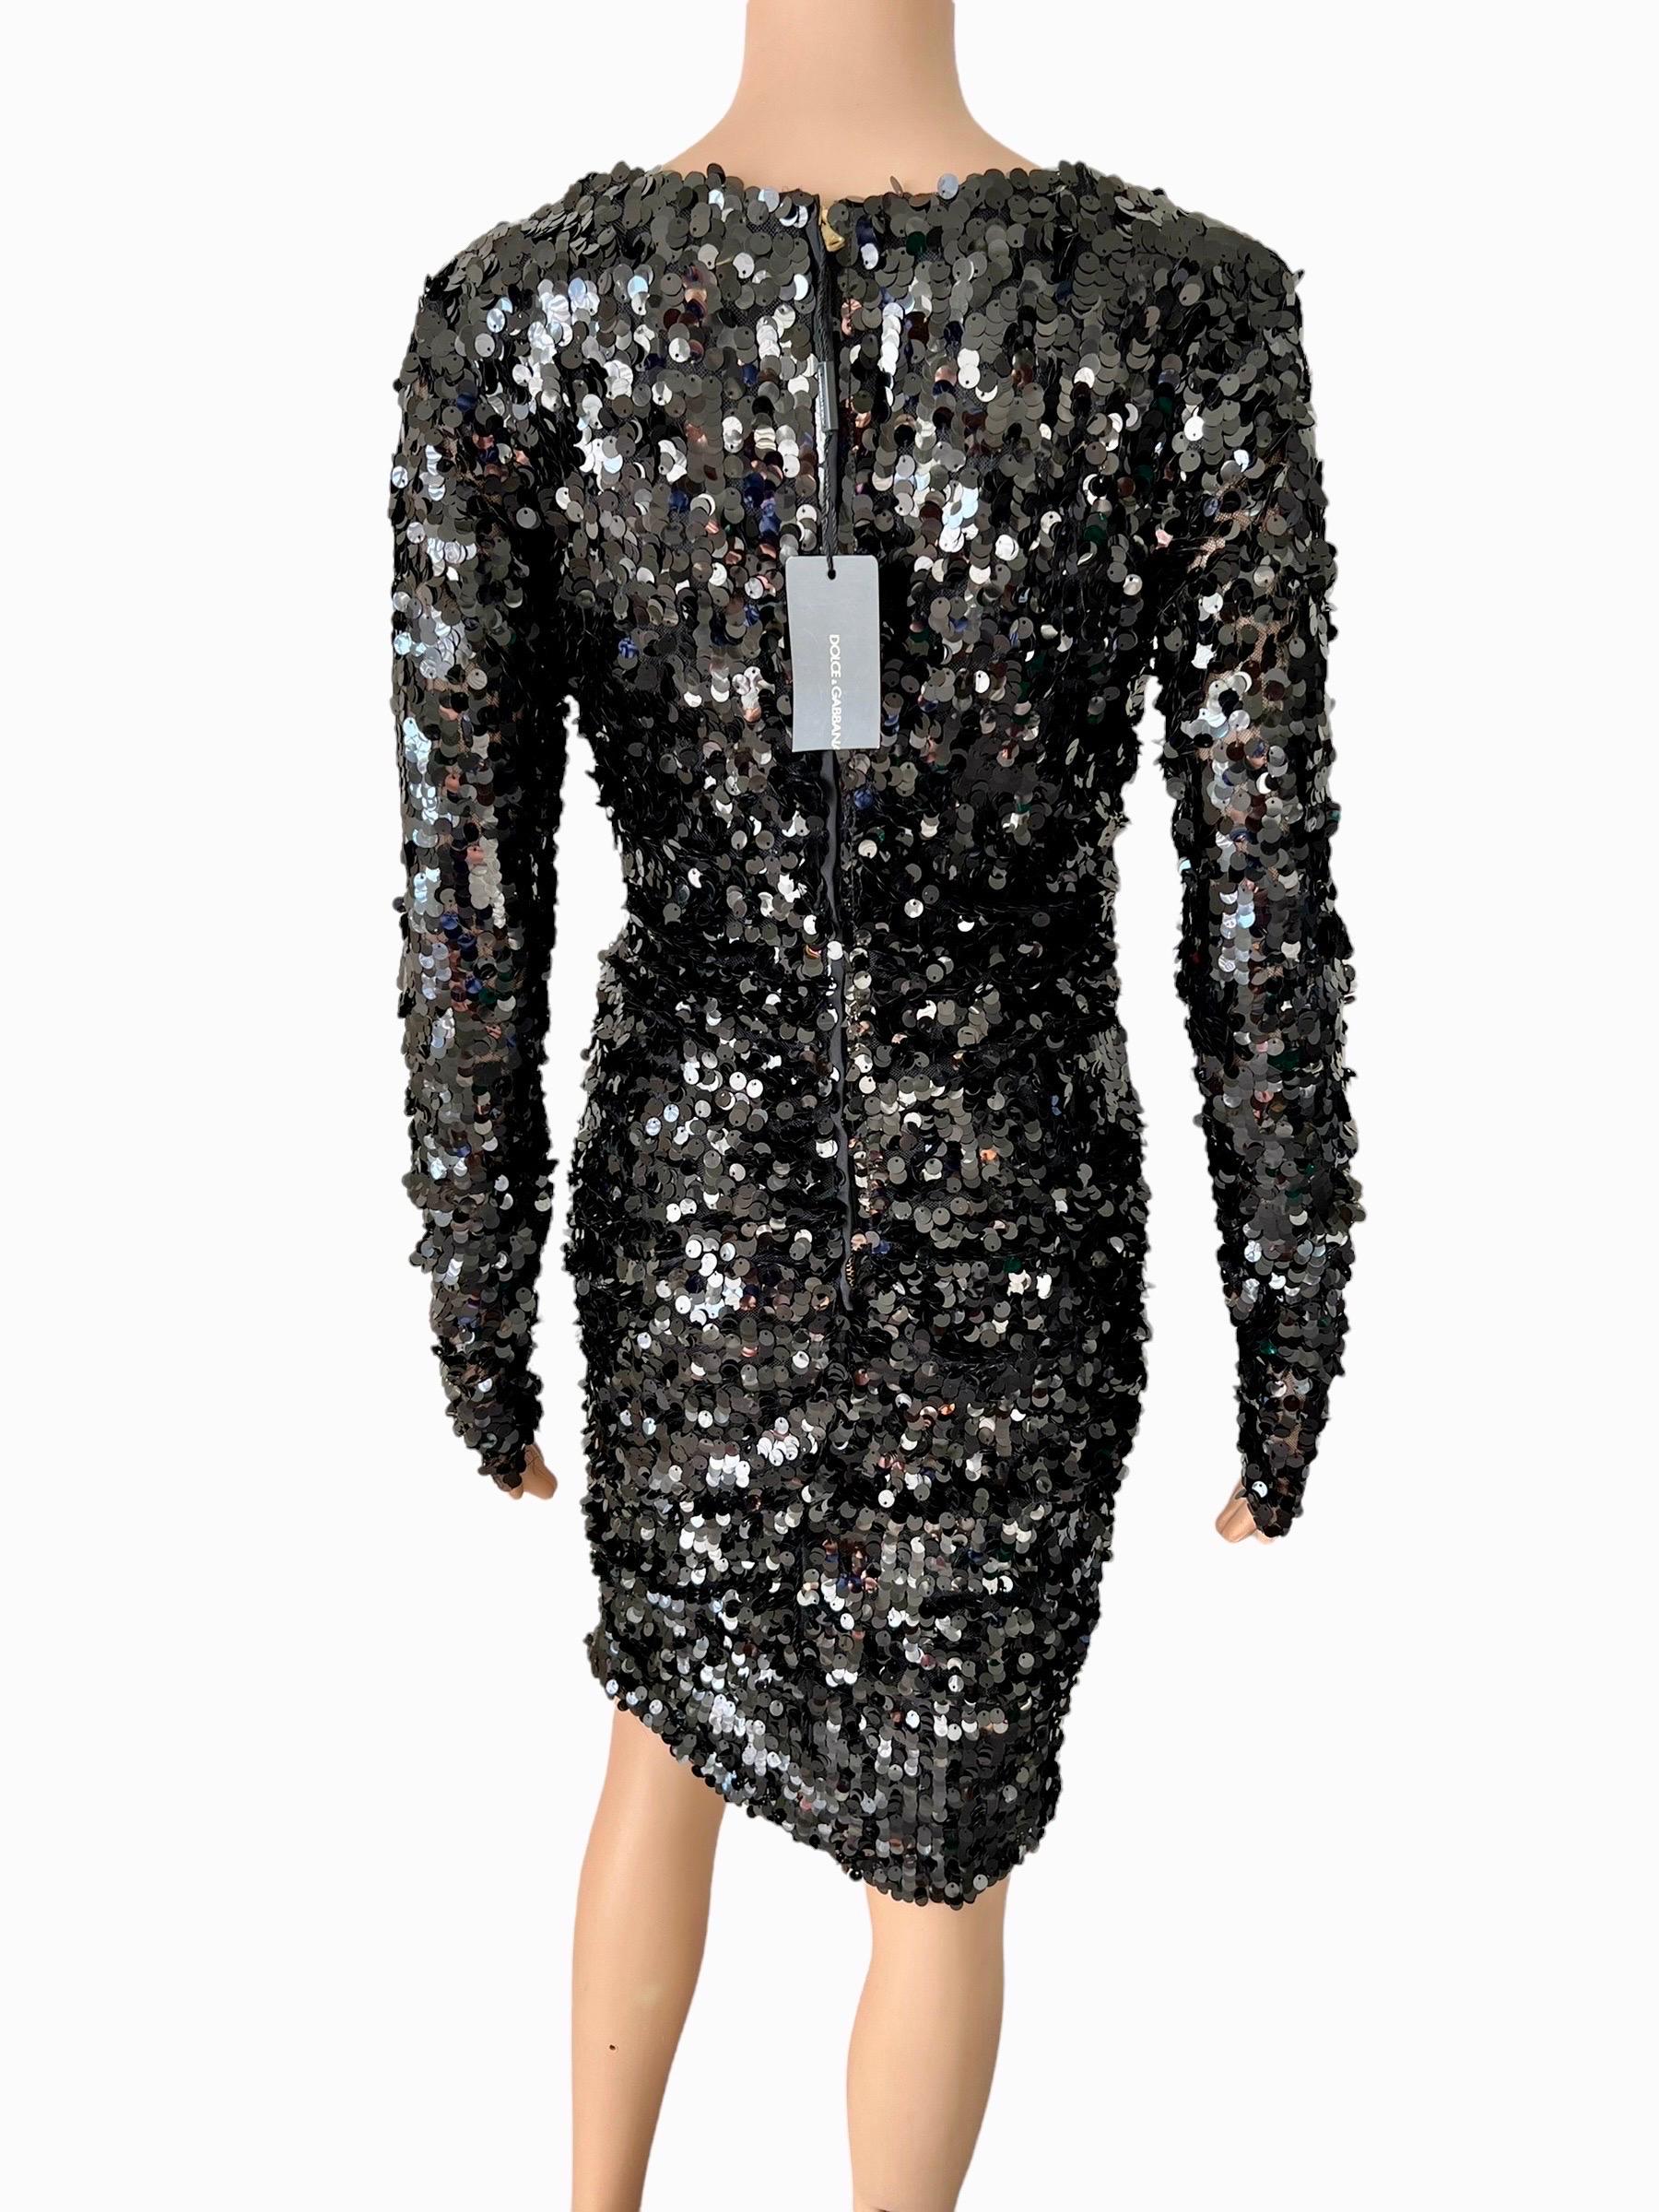 Dolce & Gabbana F/W 2011 Unworn Sequin Embellished Black Evening Dress 3